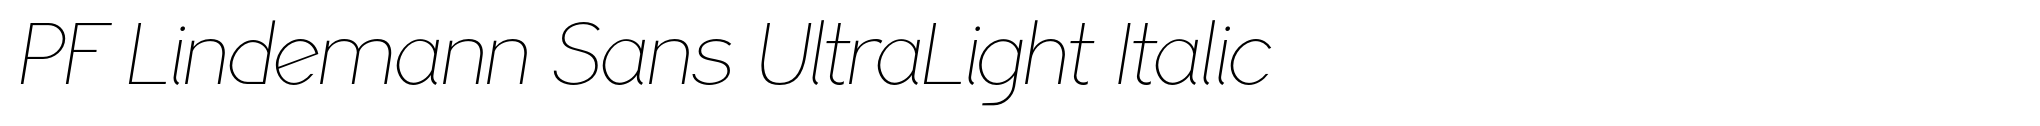 PF Lindemann Sans UltraLight Italic image